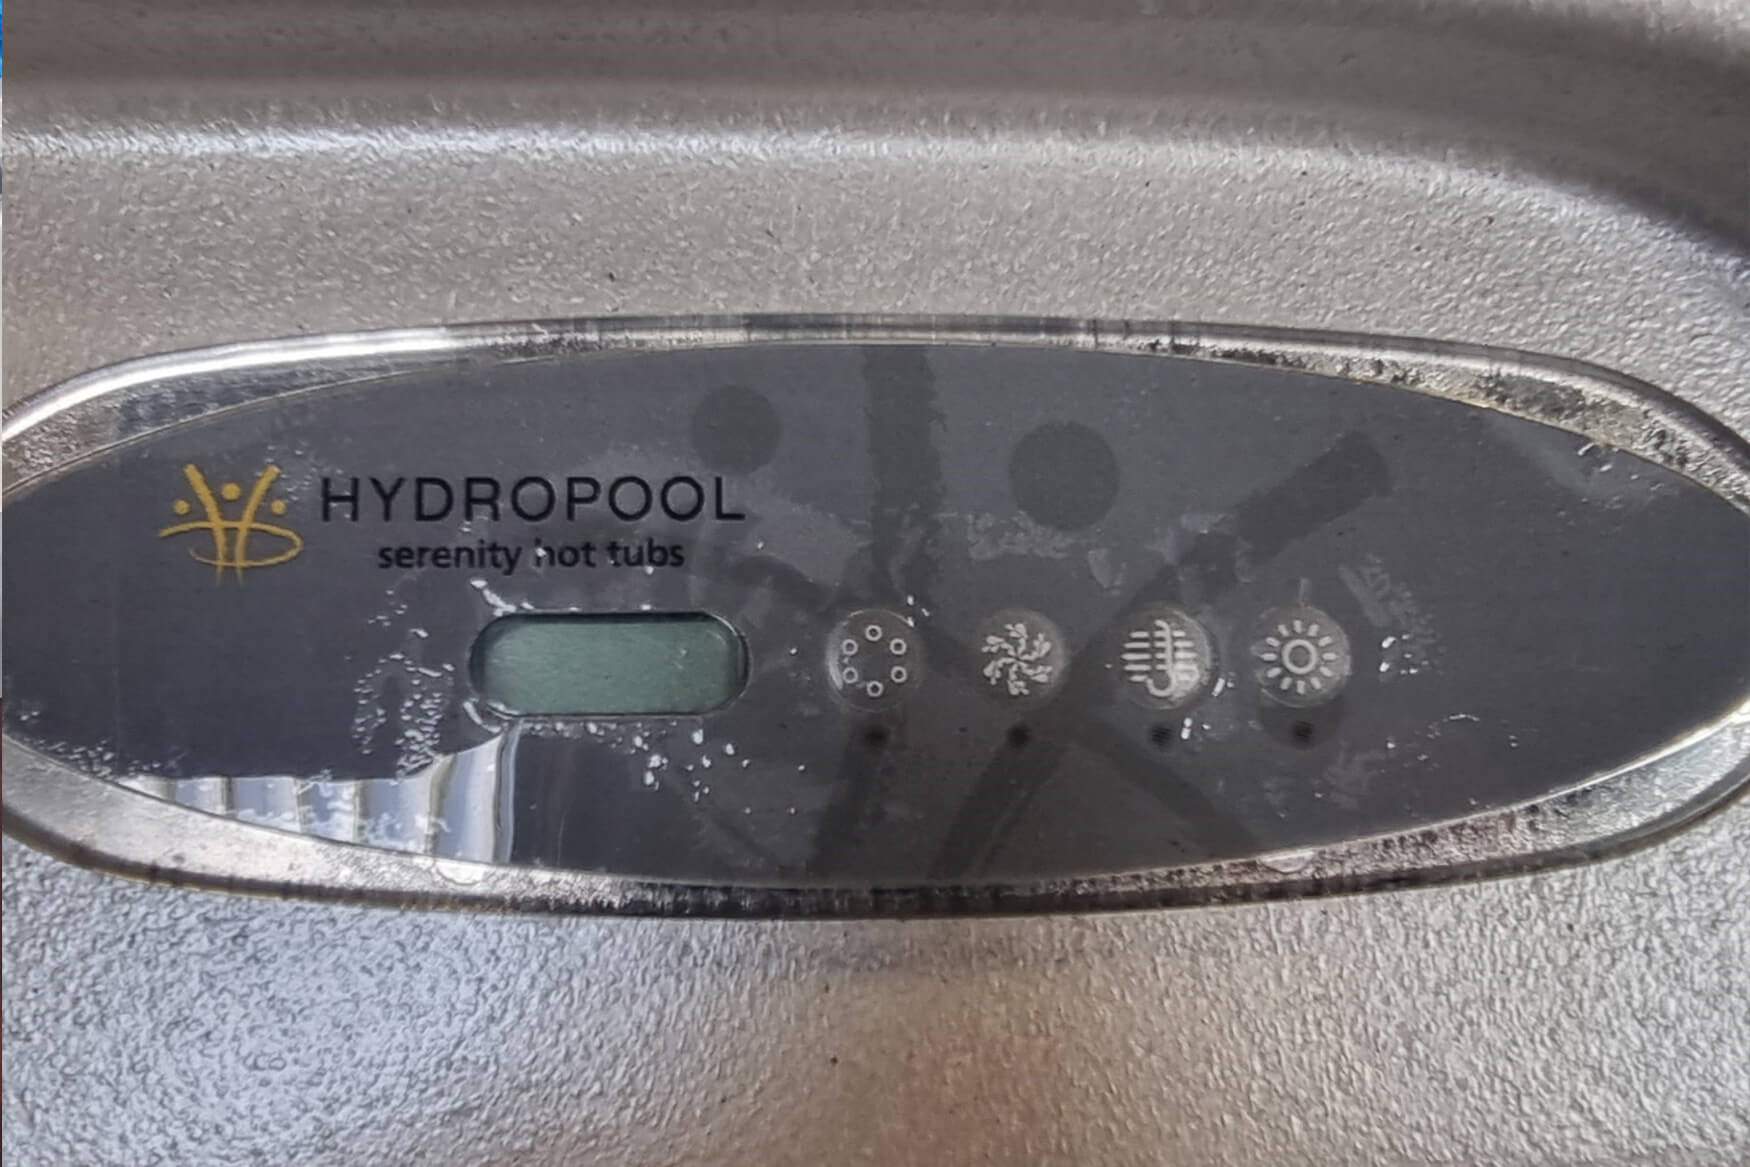 Second Hand Hydropool Serenity 4000 control panel